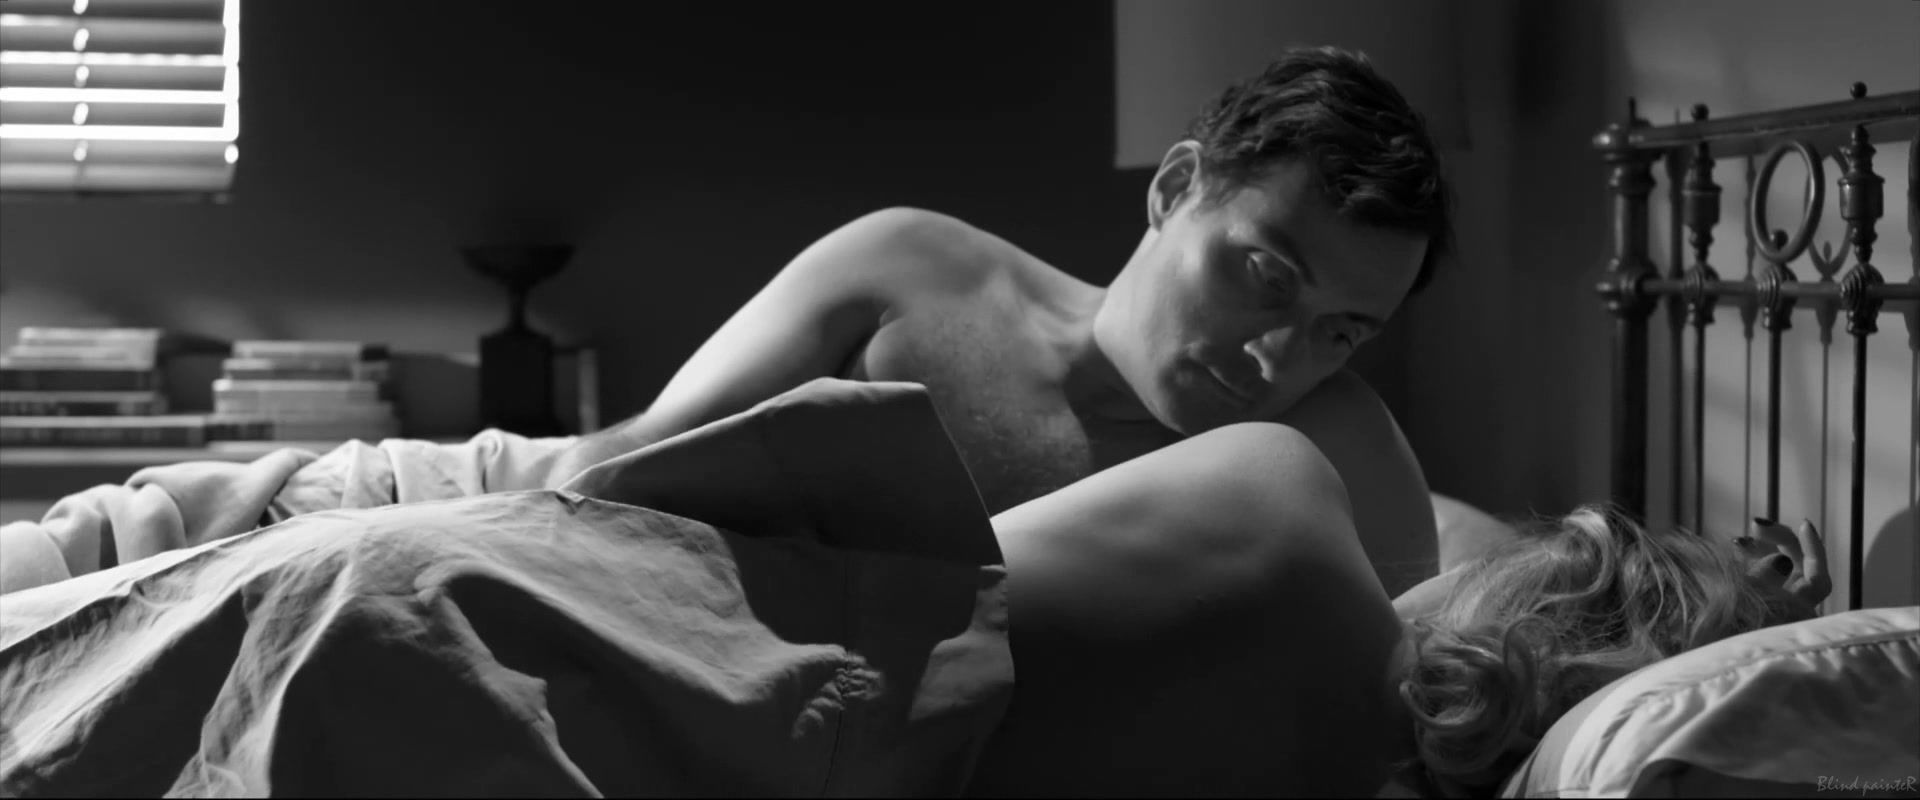 Ethnic Sex video Malin Akerman nude - Hotel Noir (2012) Couple